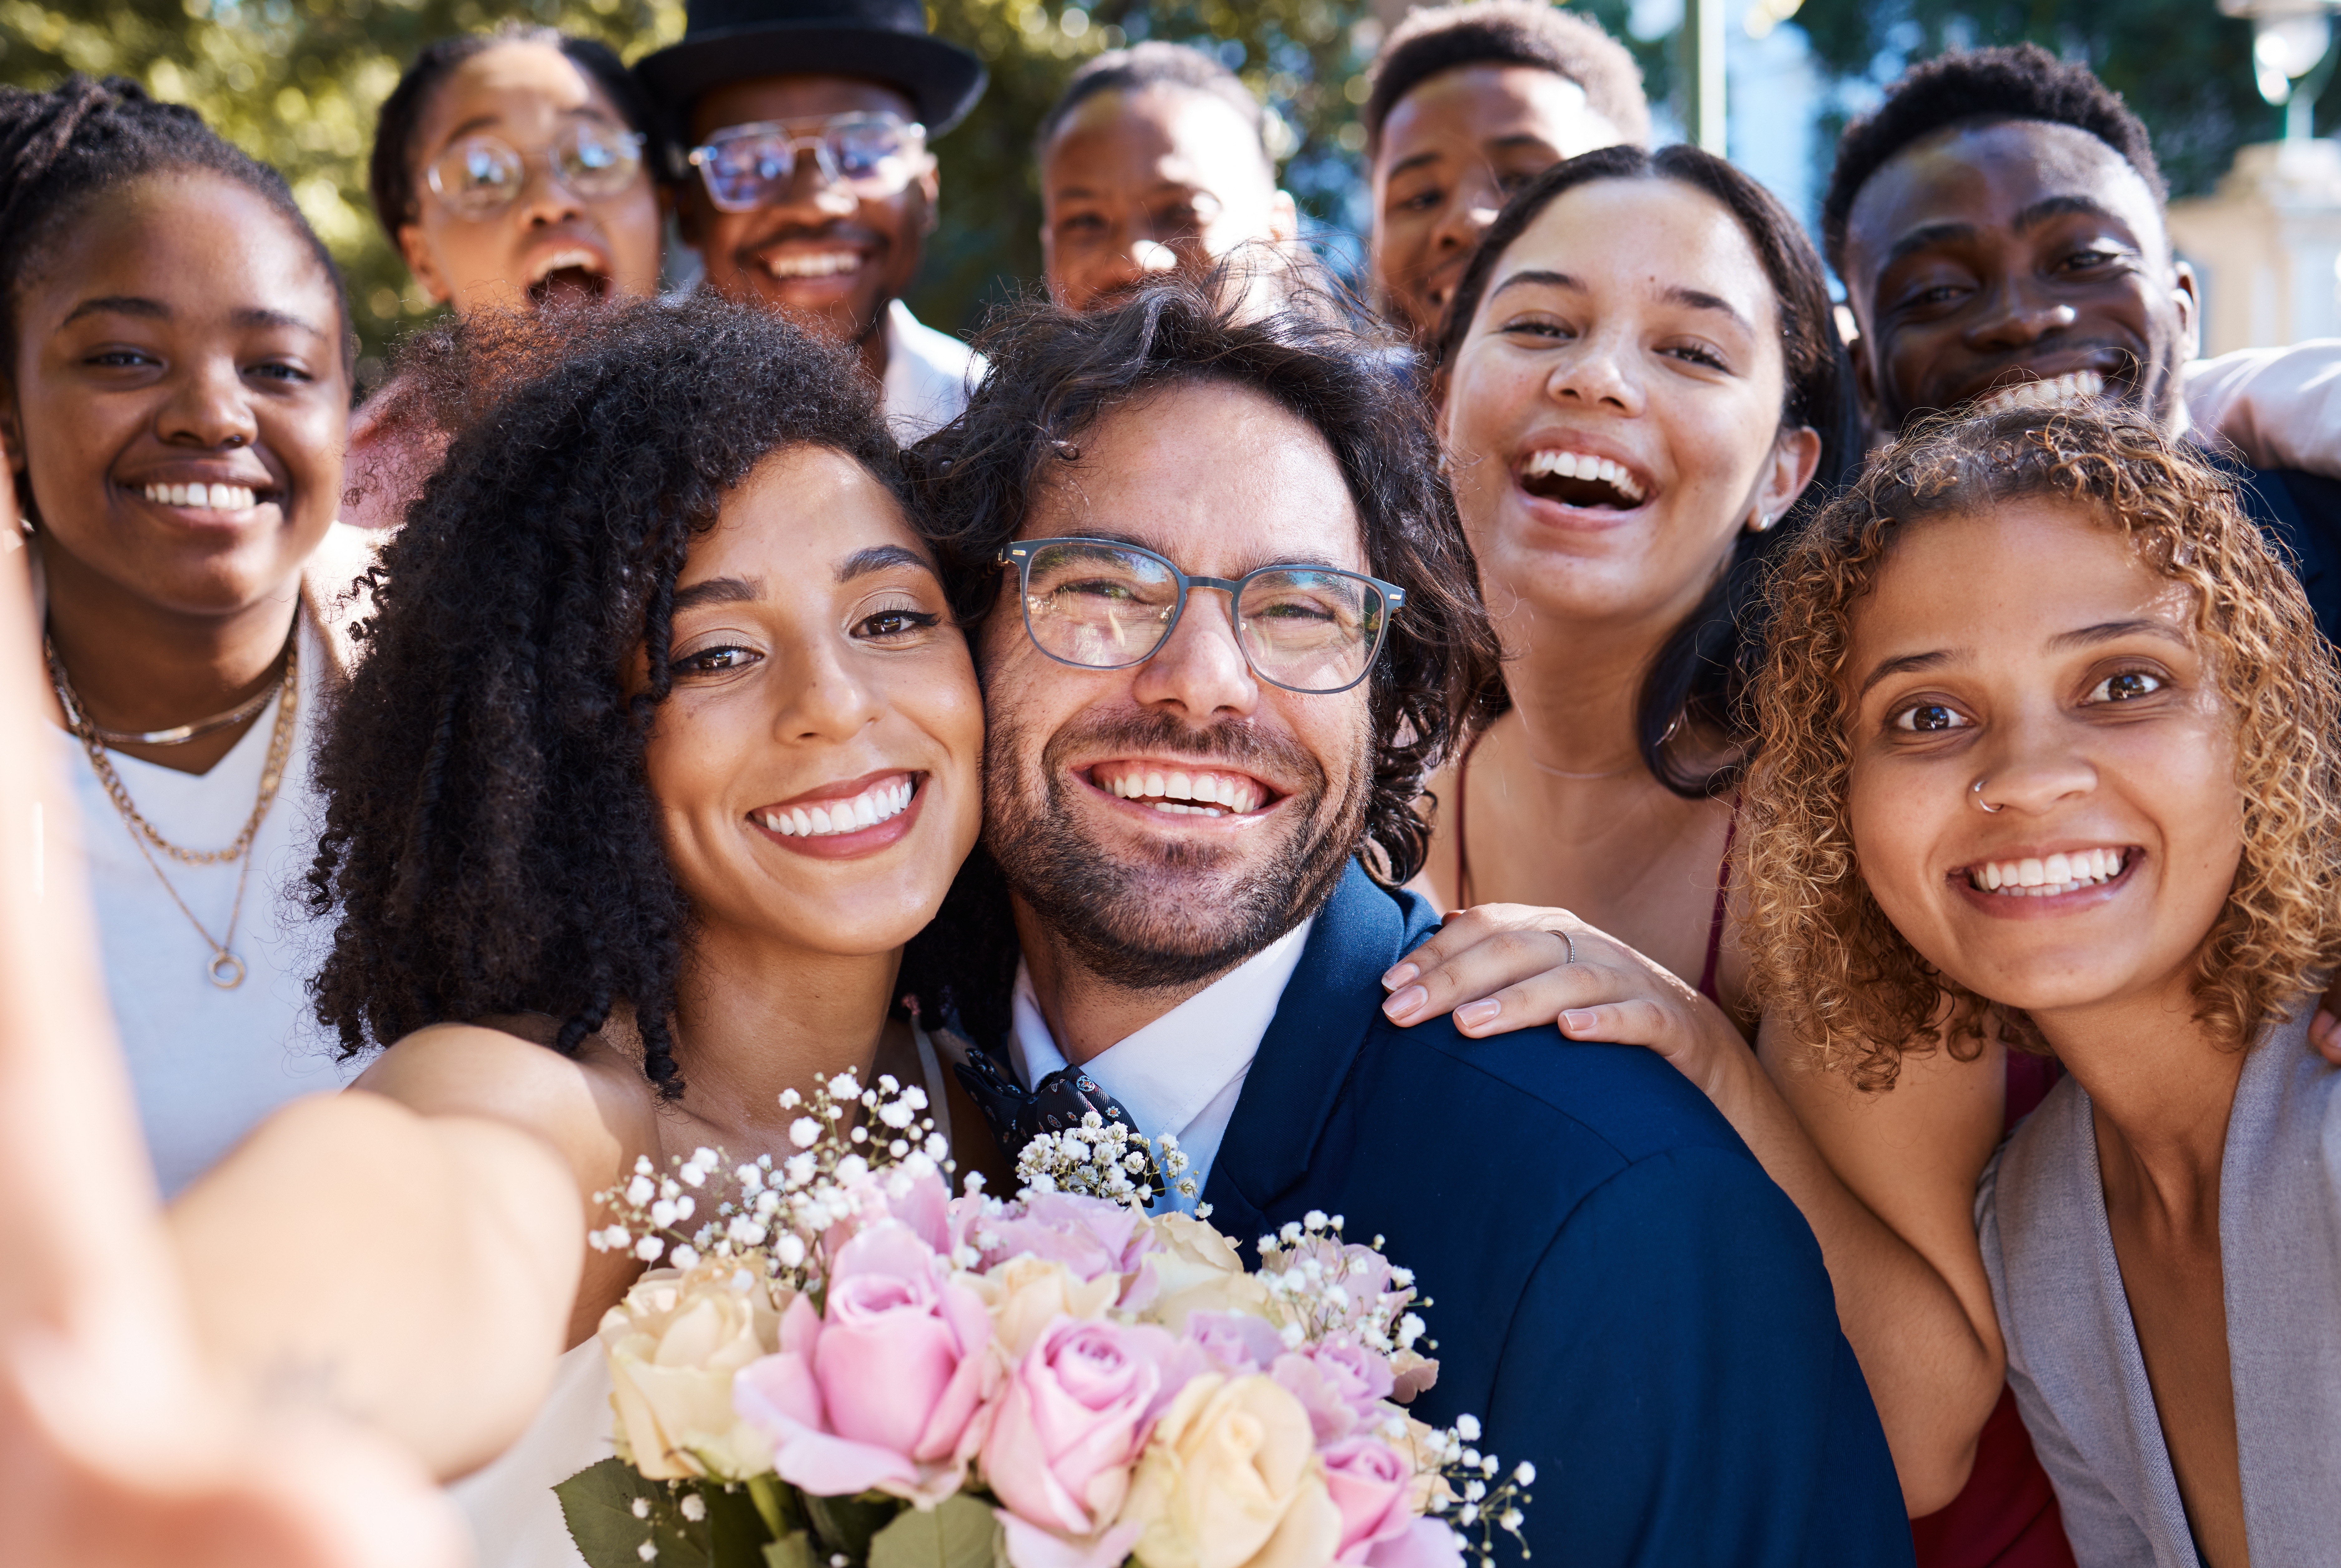 A wedding group photo | Source: Shutterstock